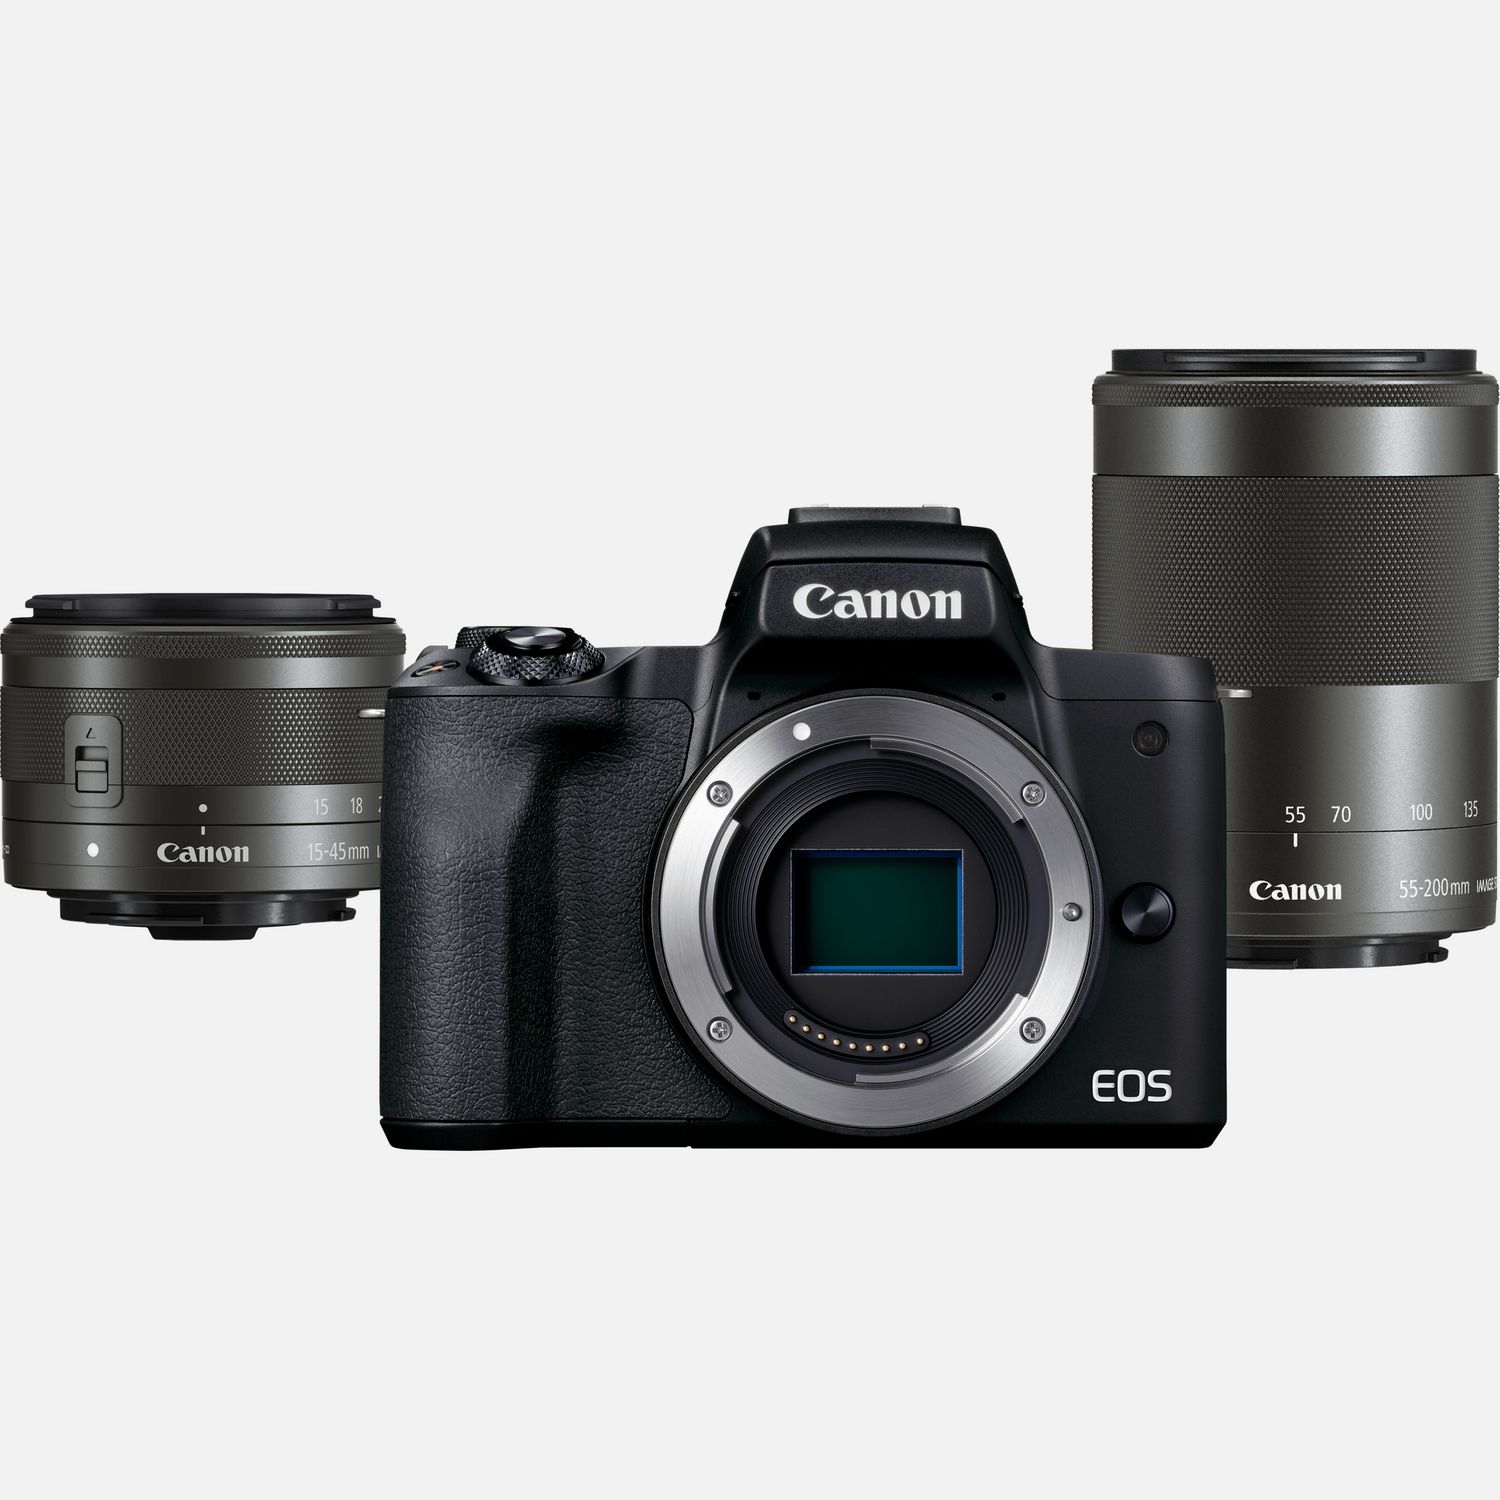 Canon EOS M50 Mark II-systeemcamera, zwart + EF-M 15-45mm IS STM-lens en  EF-M 55-200mm IS STM-lens in Wifi-camera's — Canon Nederland Store